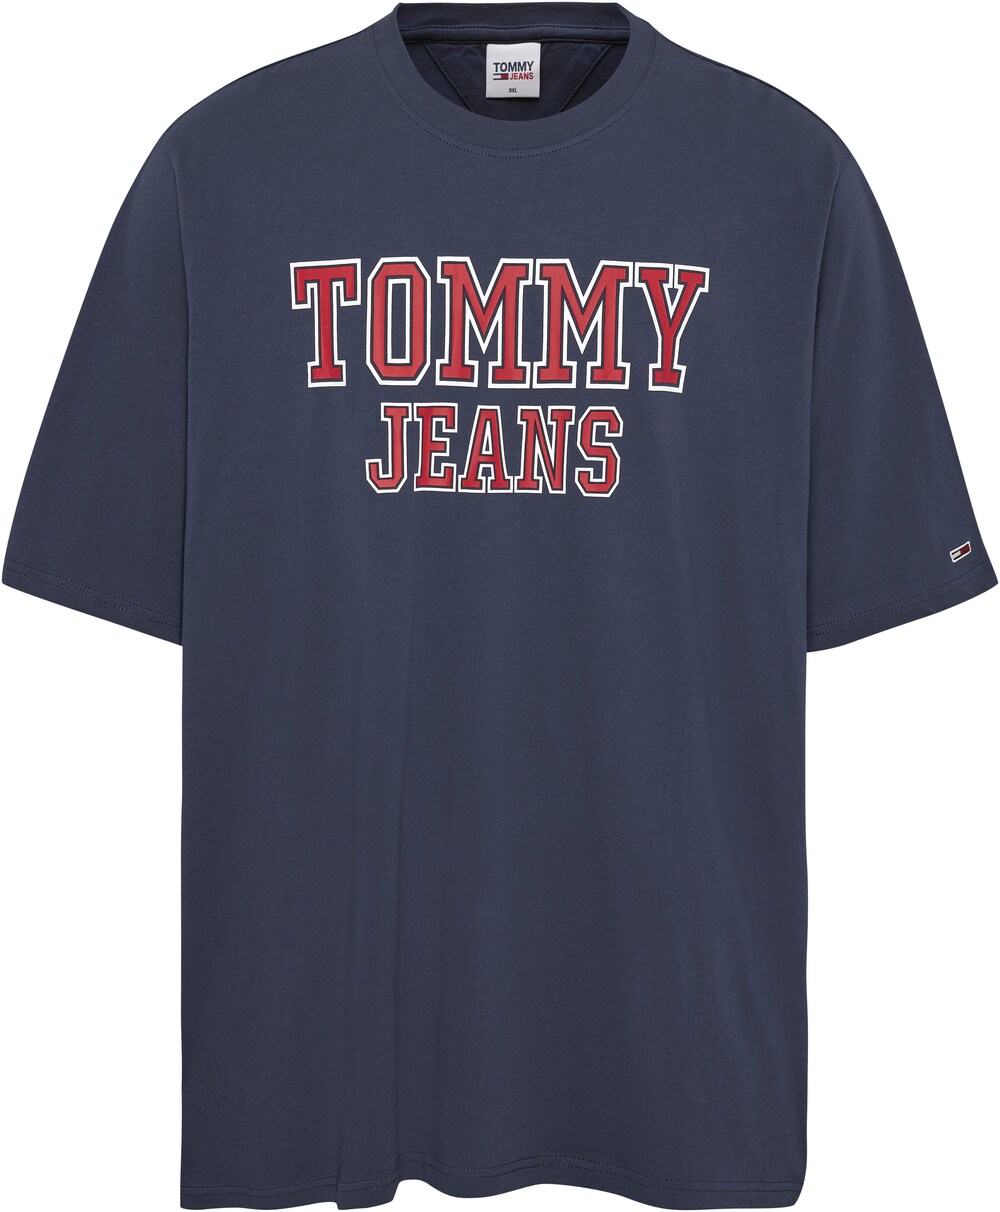 Футболка Tommy Jeans Plus, синий/темно-синий цена и фото